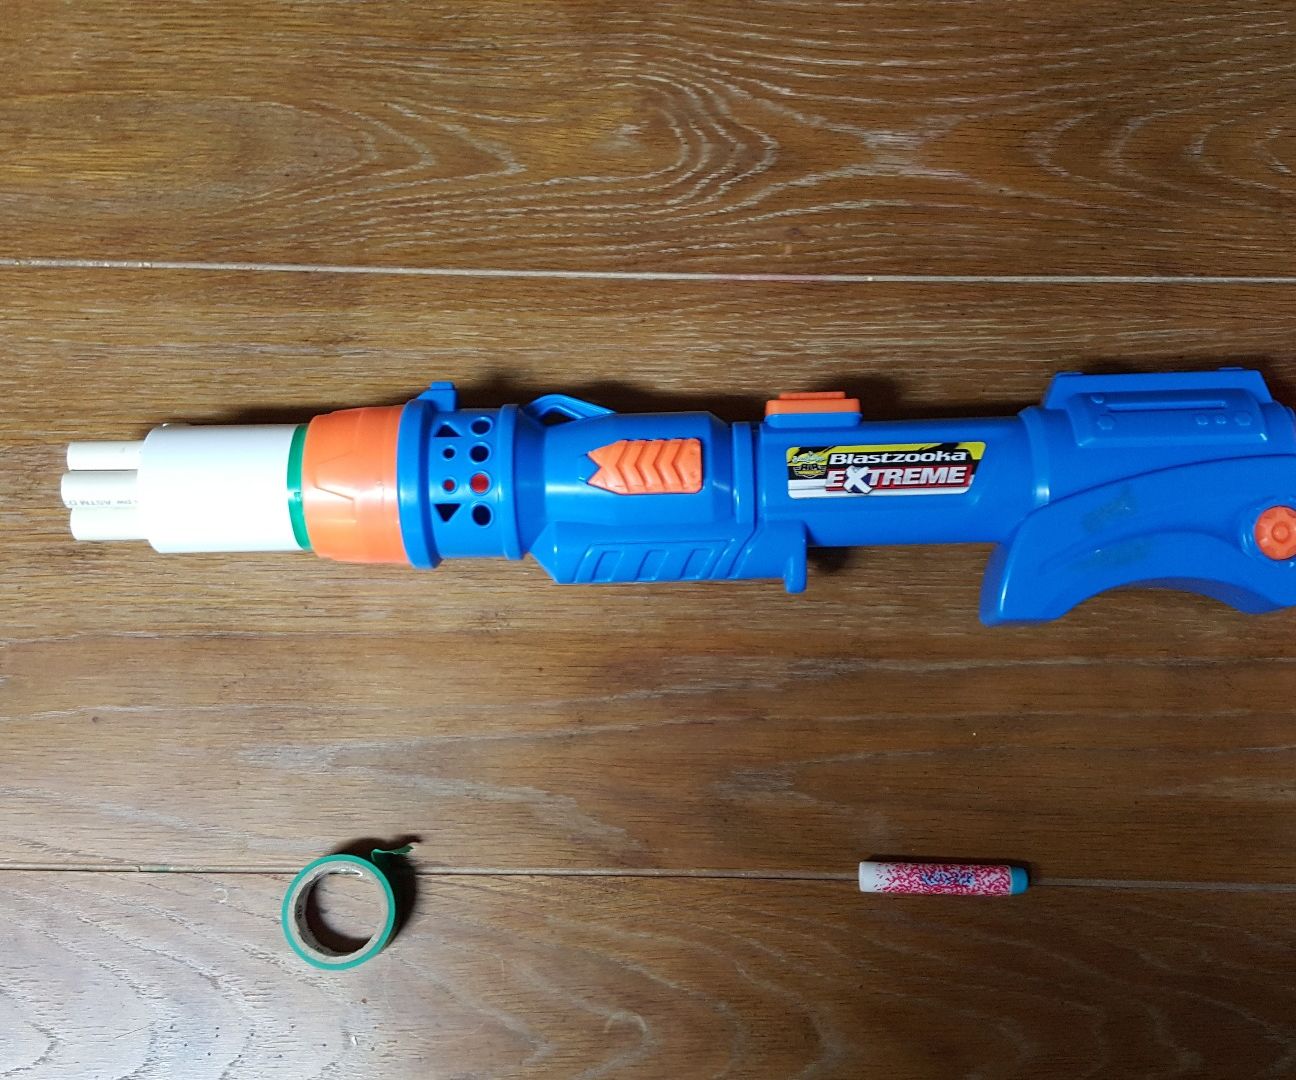 Convert a Blastzooka into a 6-dart Nerf super shotgun